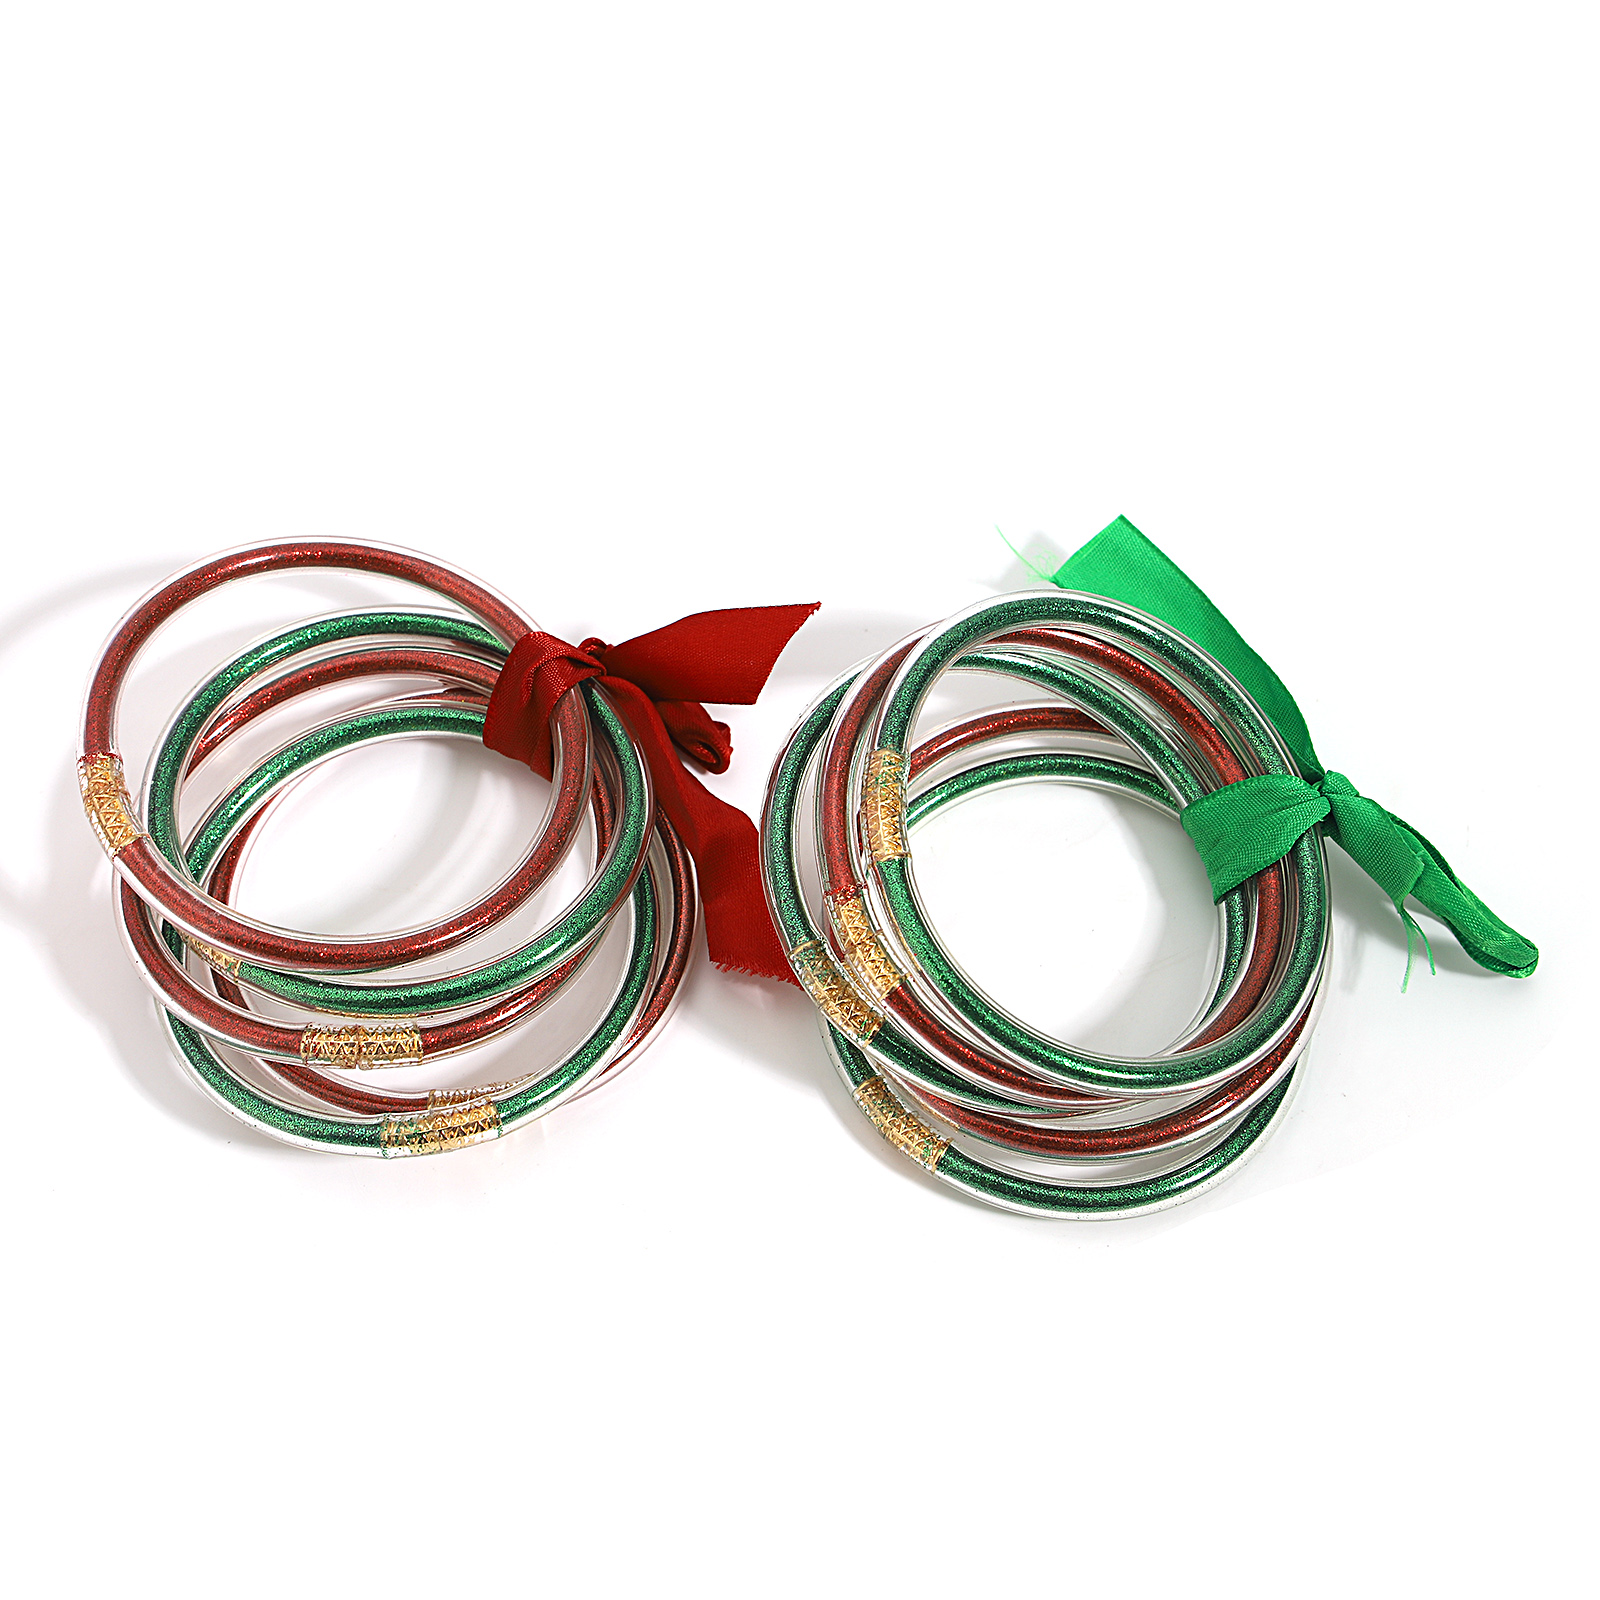 AENSOA handmade 5pcs/set Christmas Glitter Jelly Bangle Bracelet for Women Men Red Green Shiny Silicone Bangles Set Xmas Jewelry Gift 1